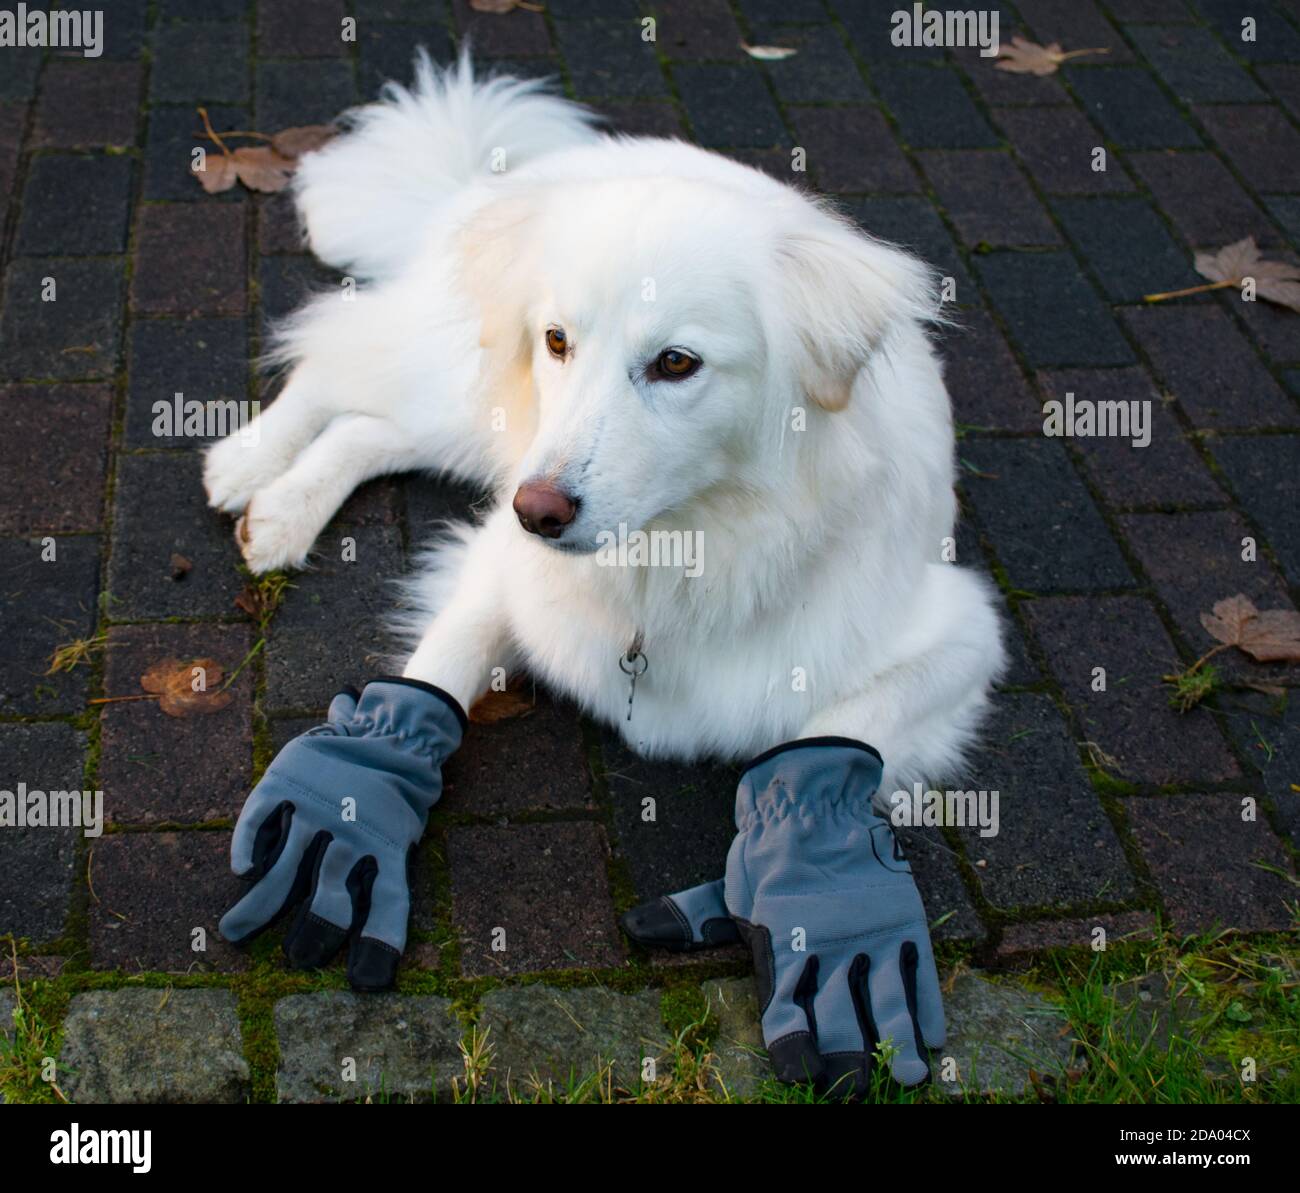 Funny Dog Doing House Work Wearing Gloves and Raking Leaves - Dog Doing Chores Motif Stock Photo